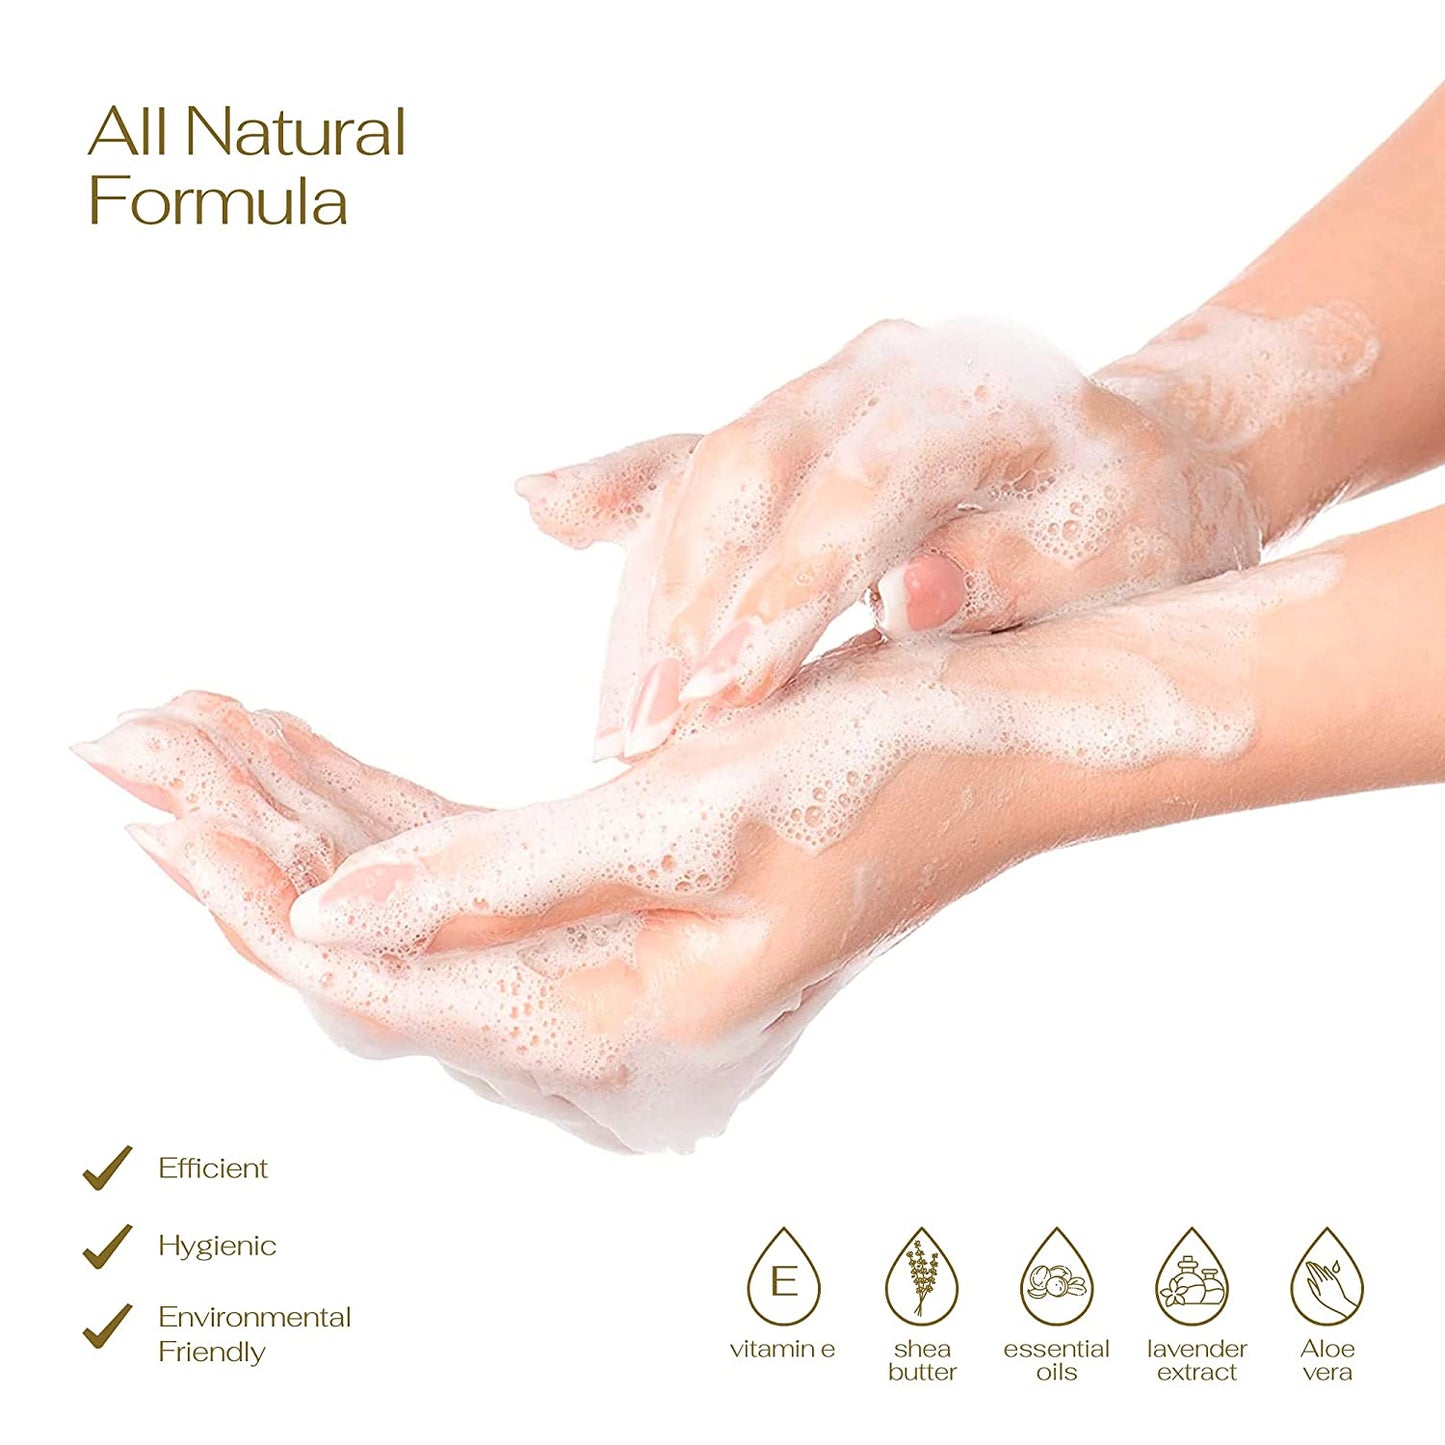 Vanilla Coconut Foaming Hand Soap - 8.7 fl oz